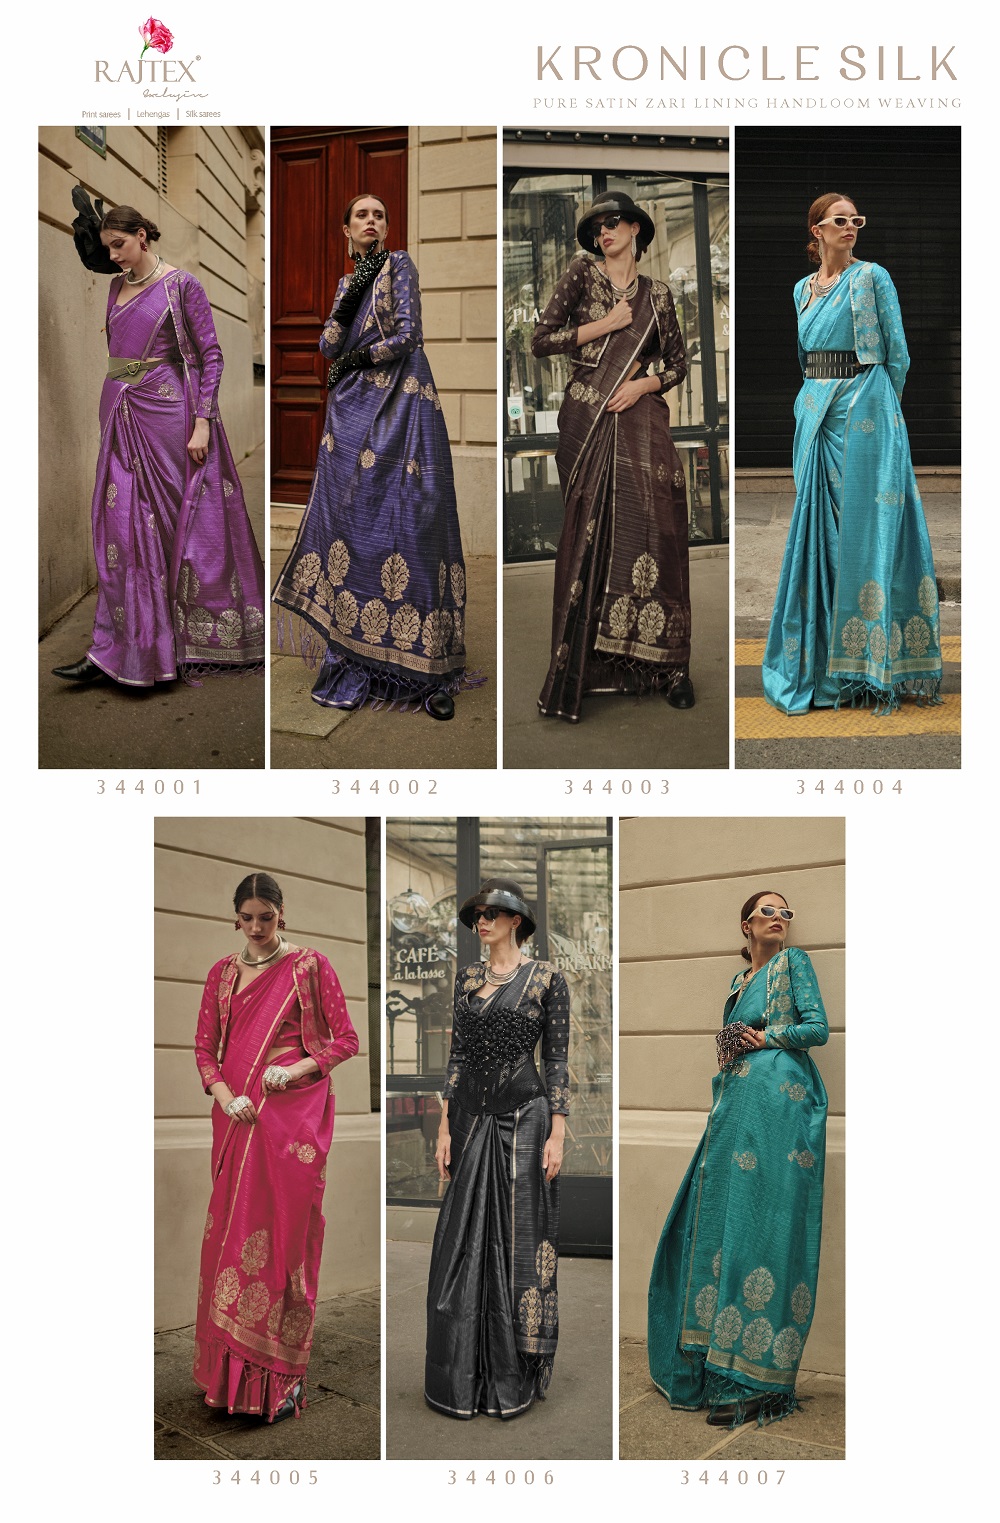 Rajtex Kronicle Silk collection 4